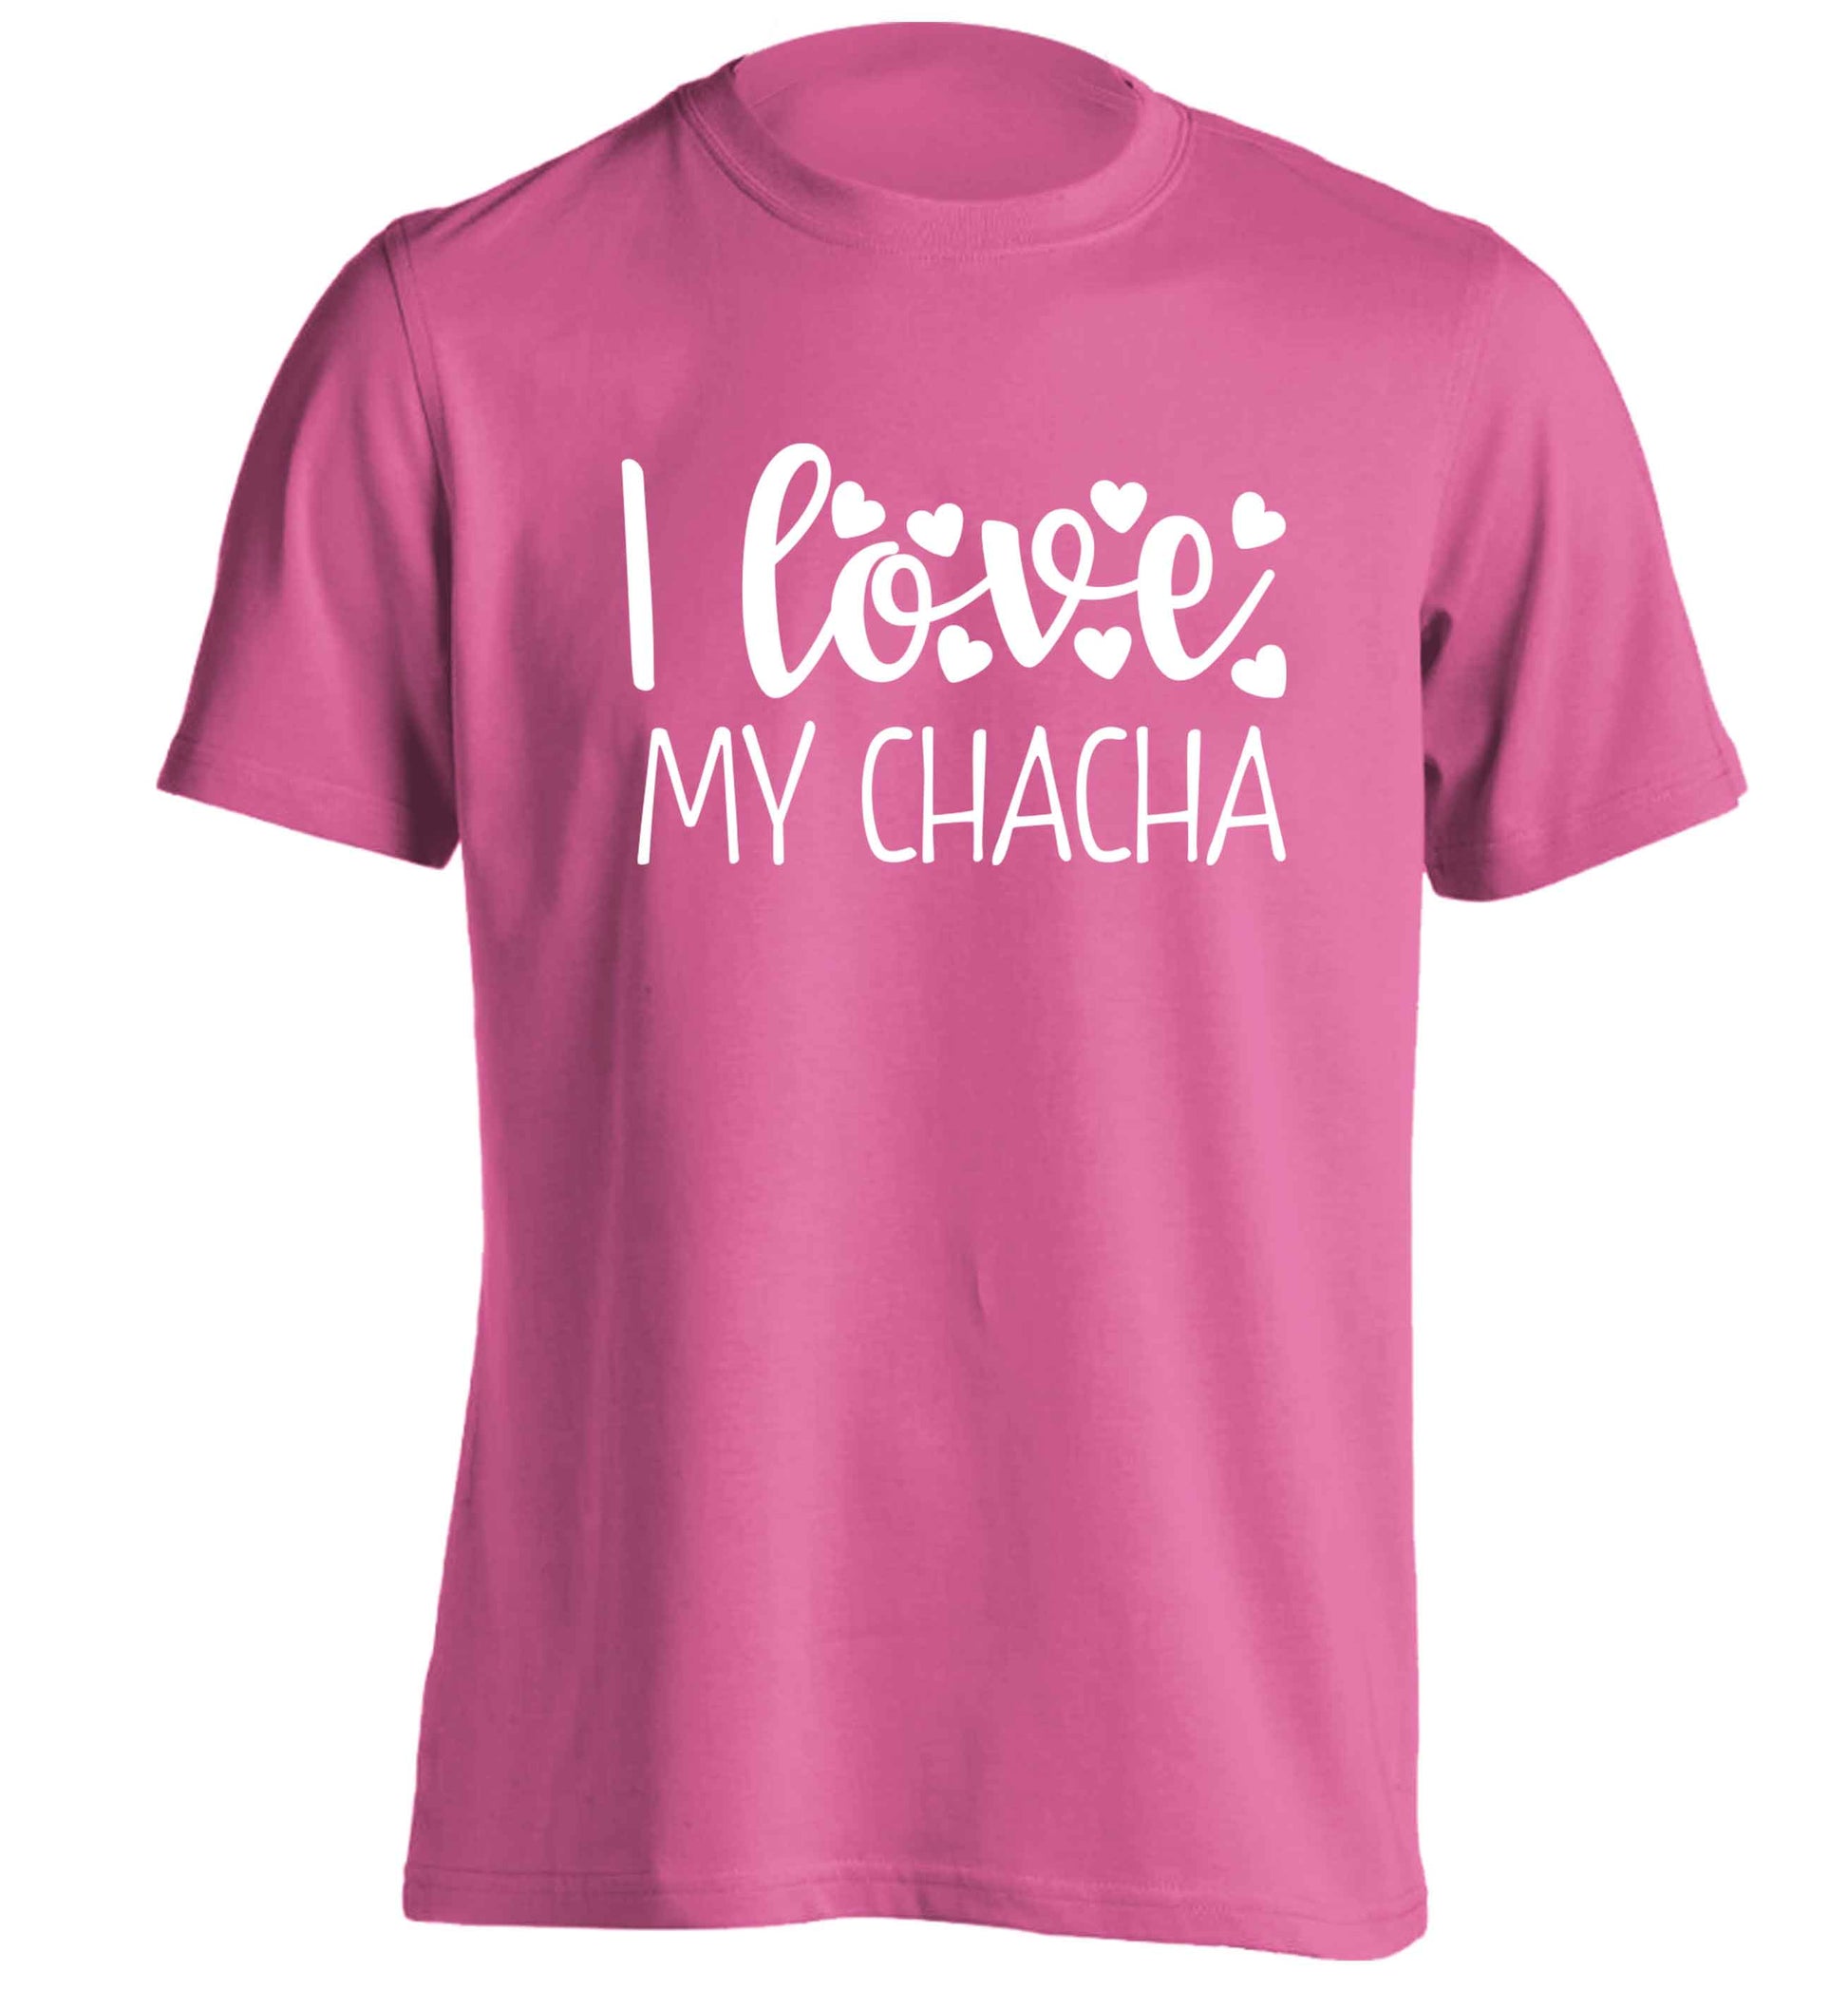 I love my chacha adults unisex pink Tshirt 2XL